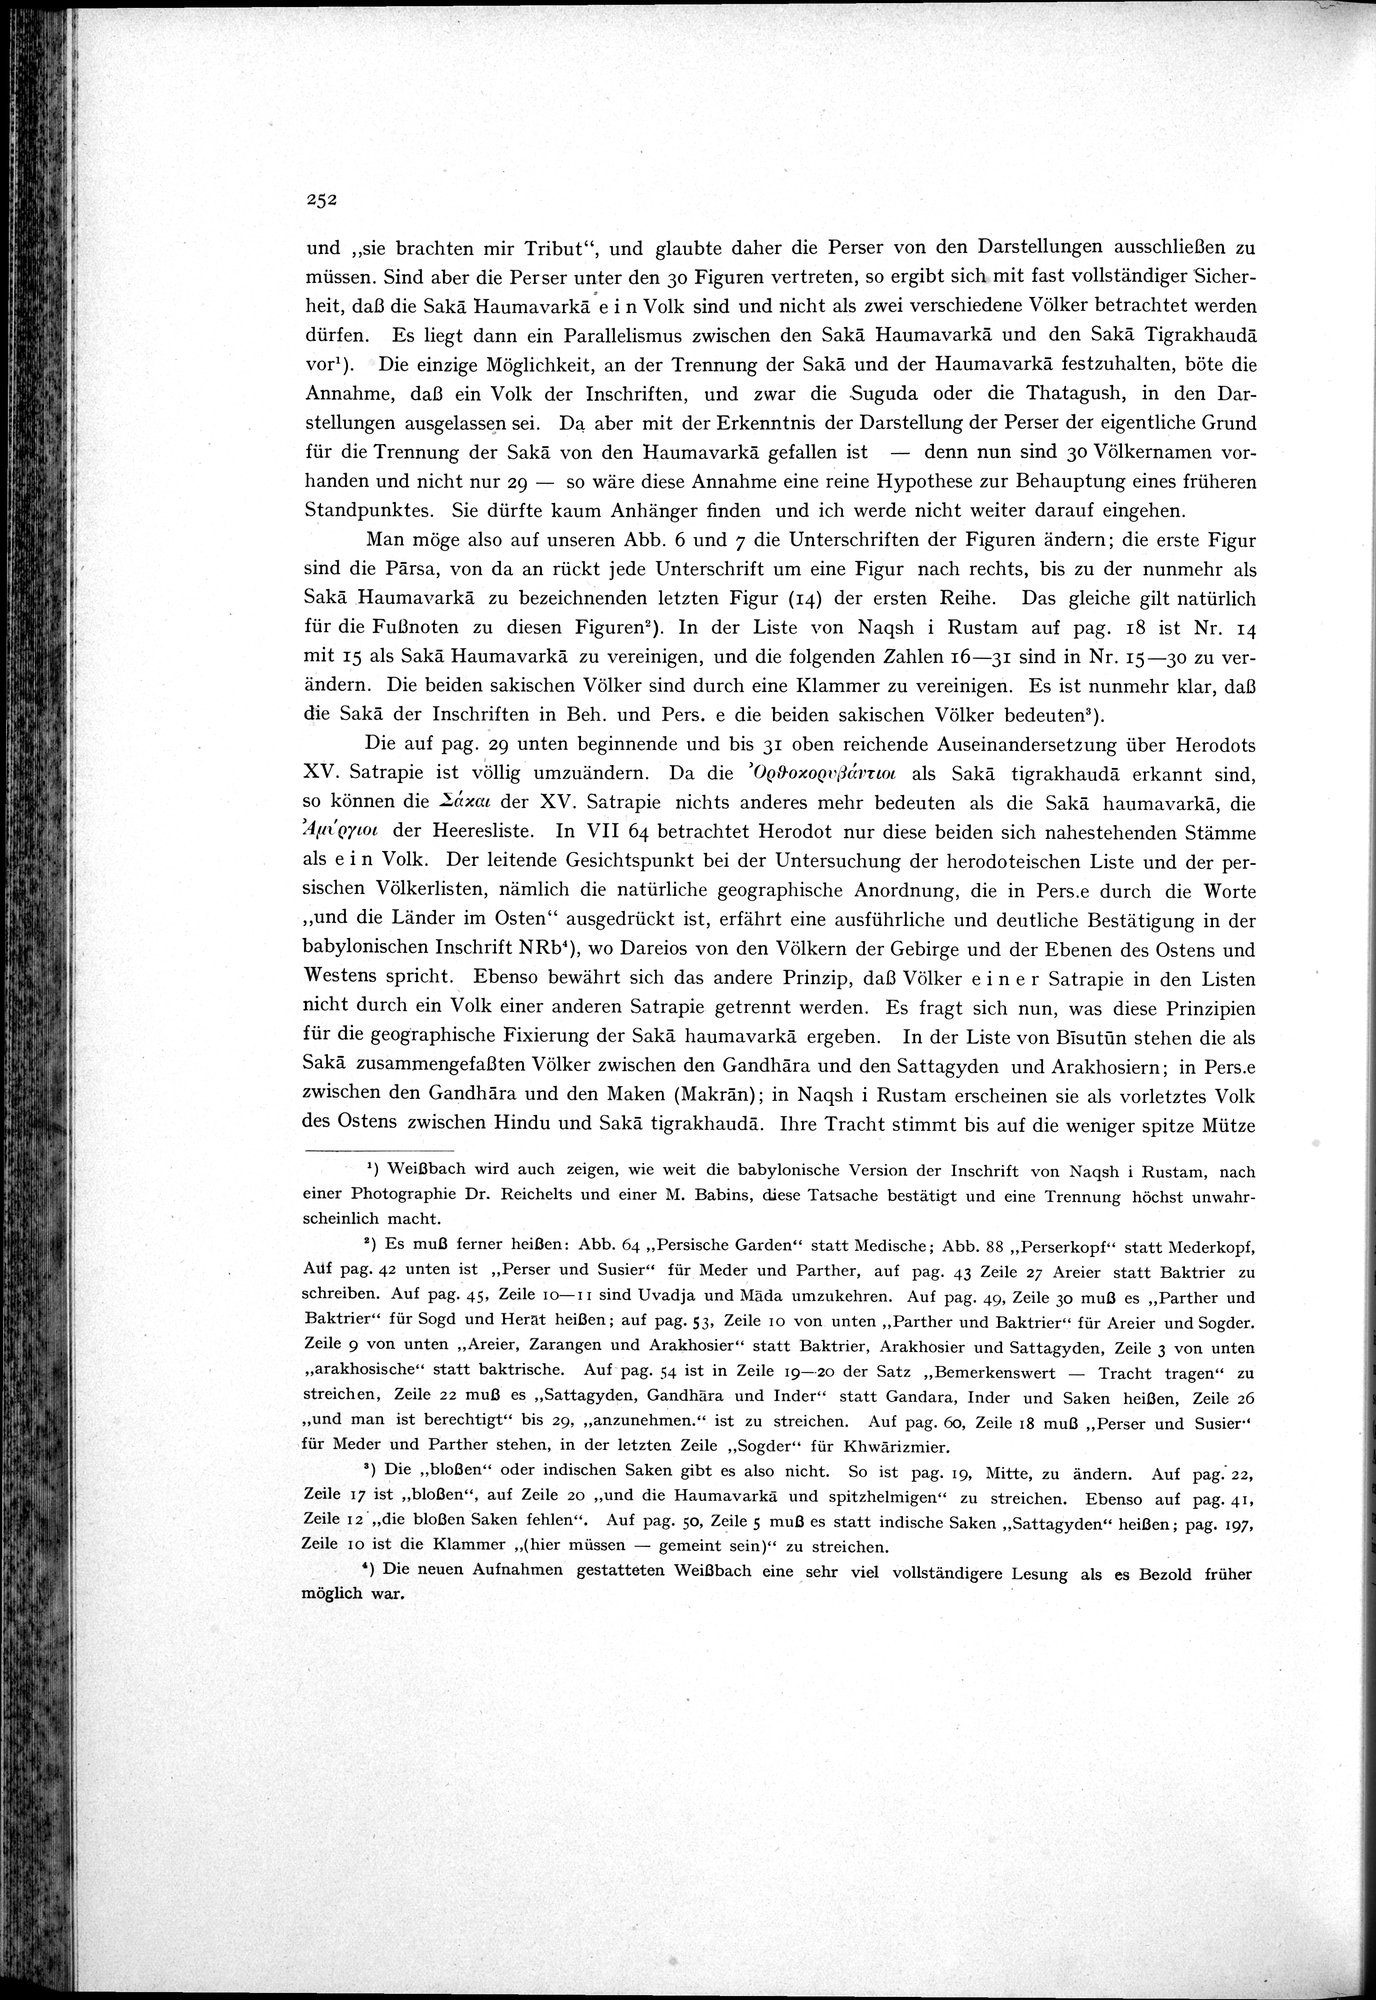 Iranische Felsreliefs : vol.1 / Page 264 (Grayscale High Resolution Image)